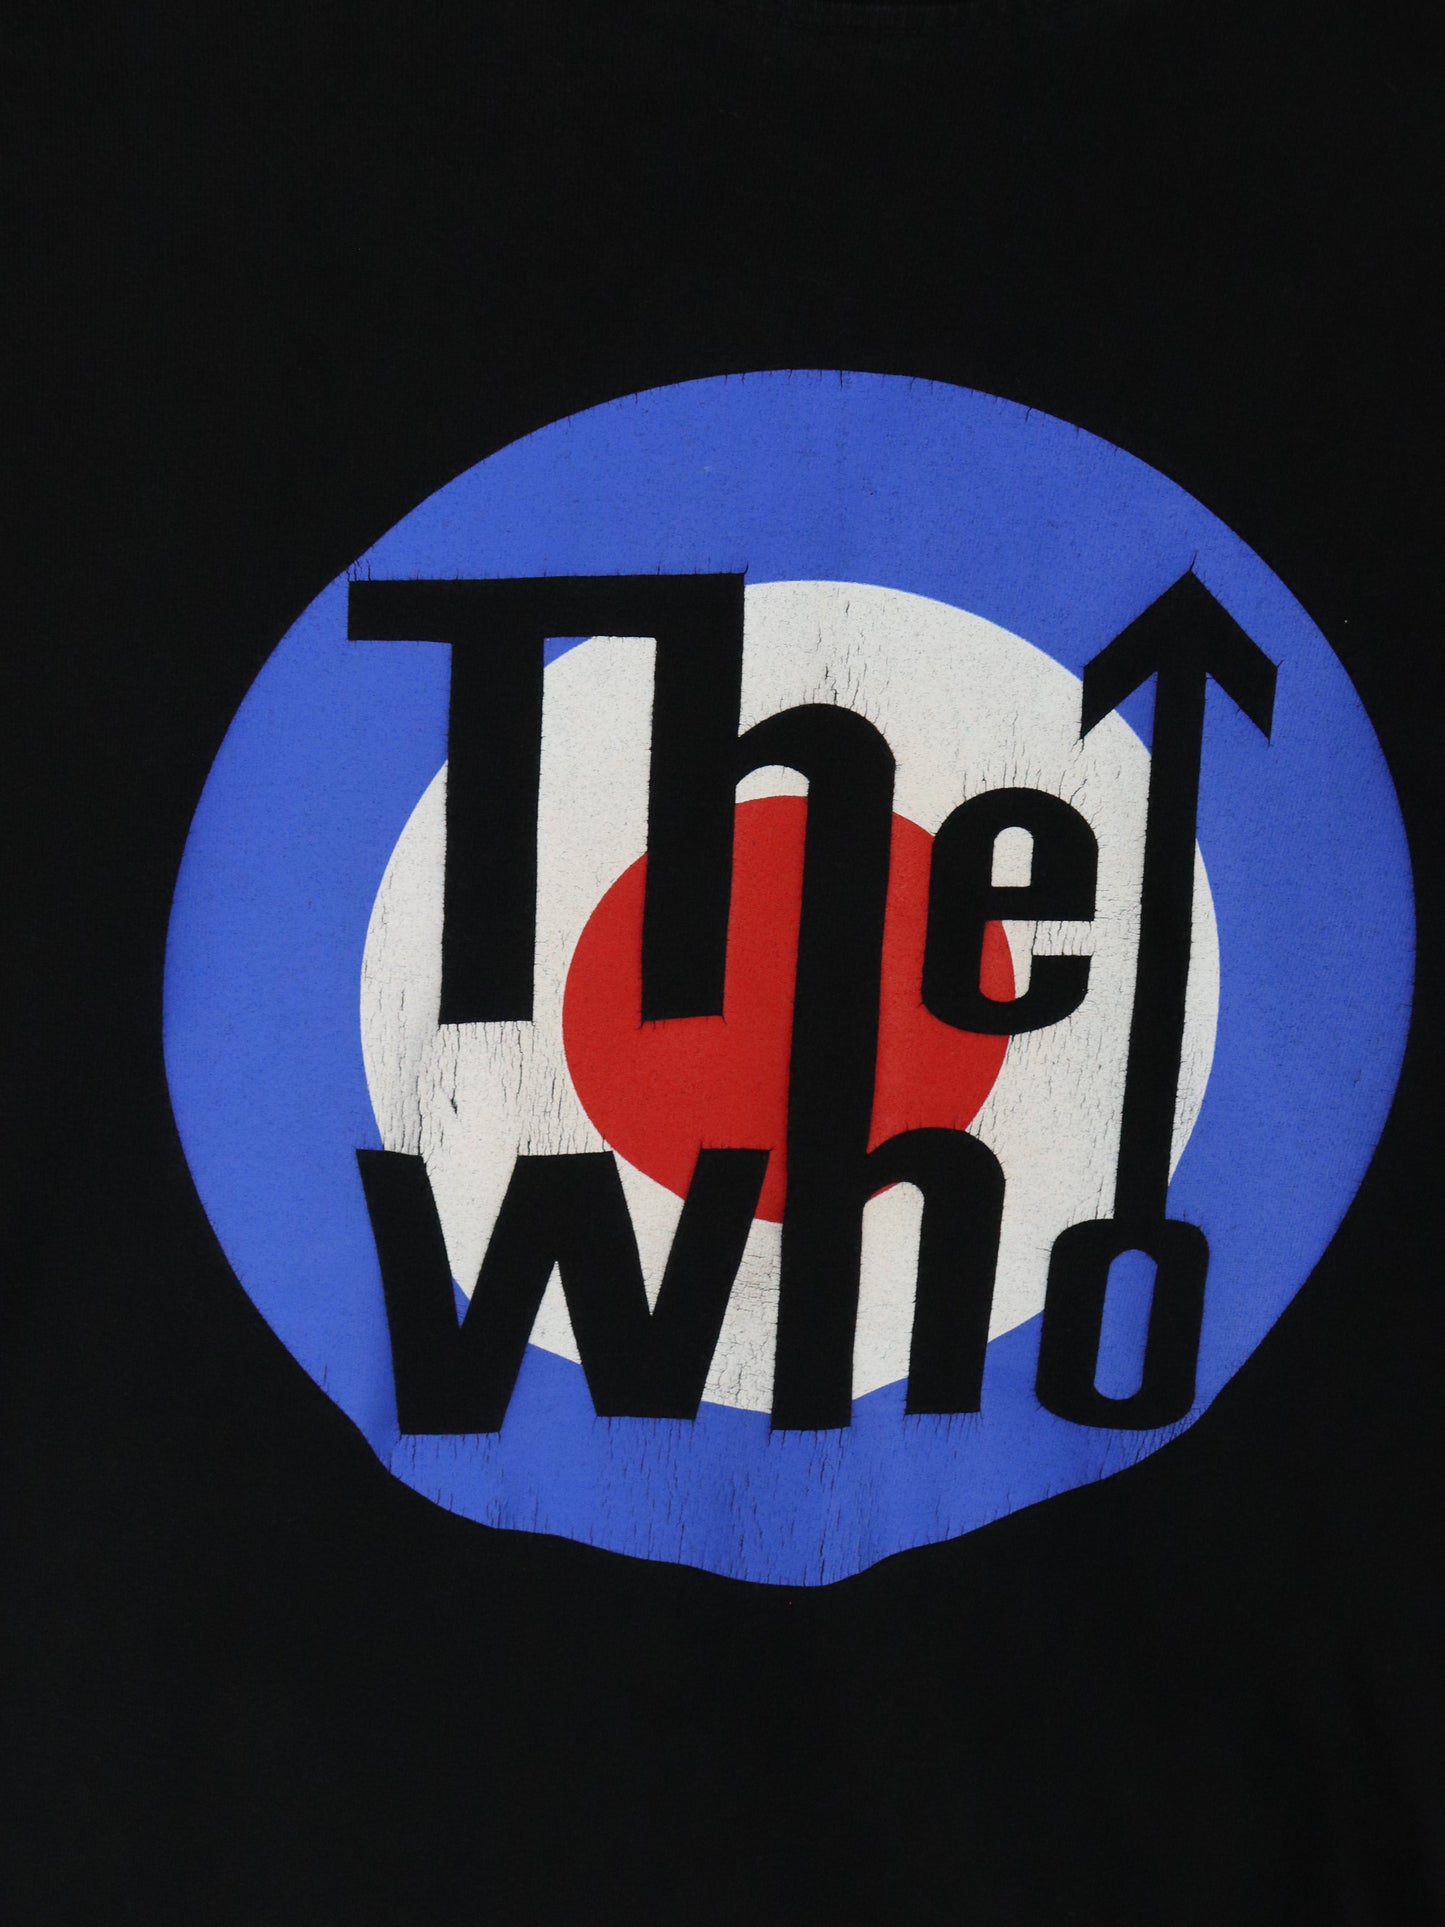 The Who T Shirt Mens Medium Black Band